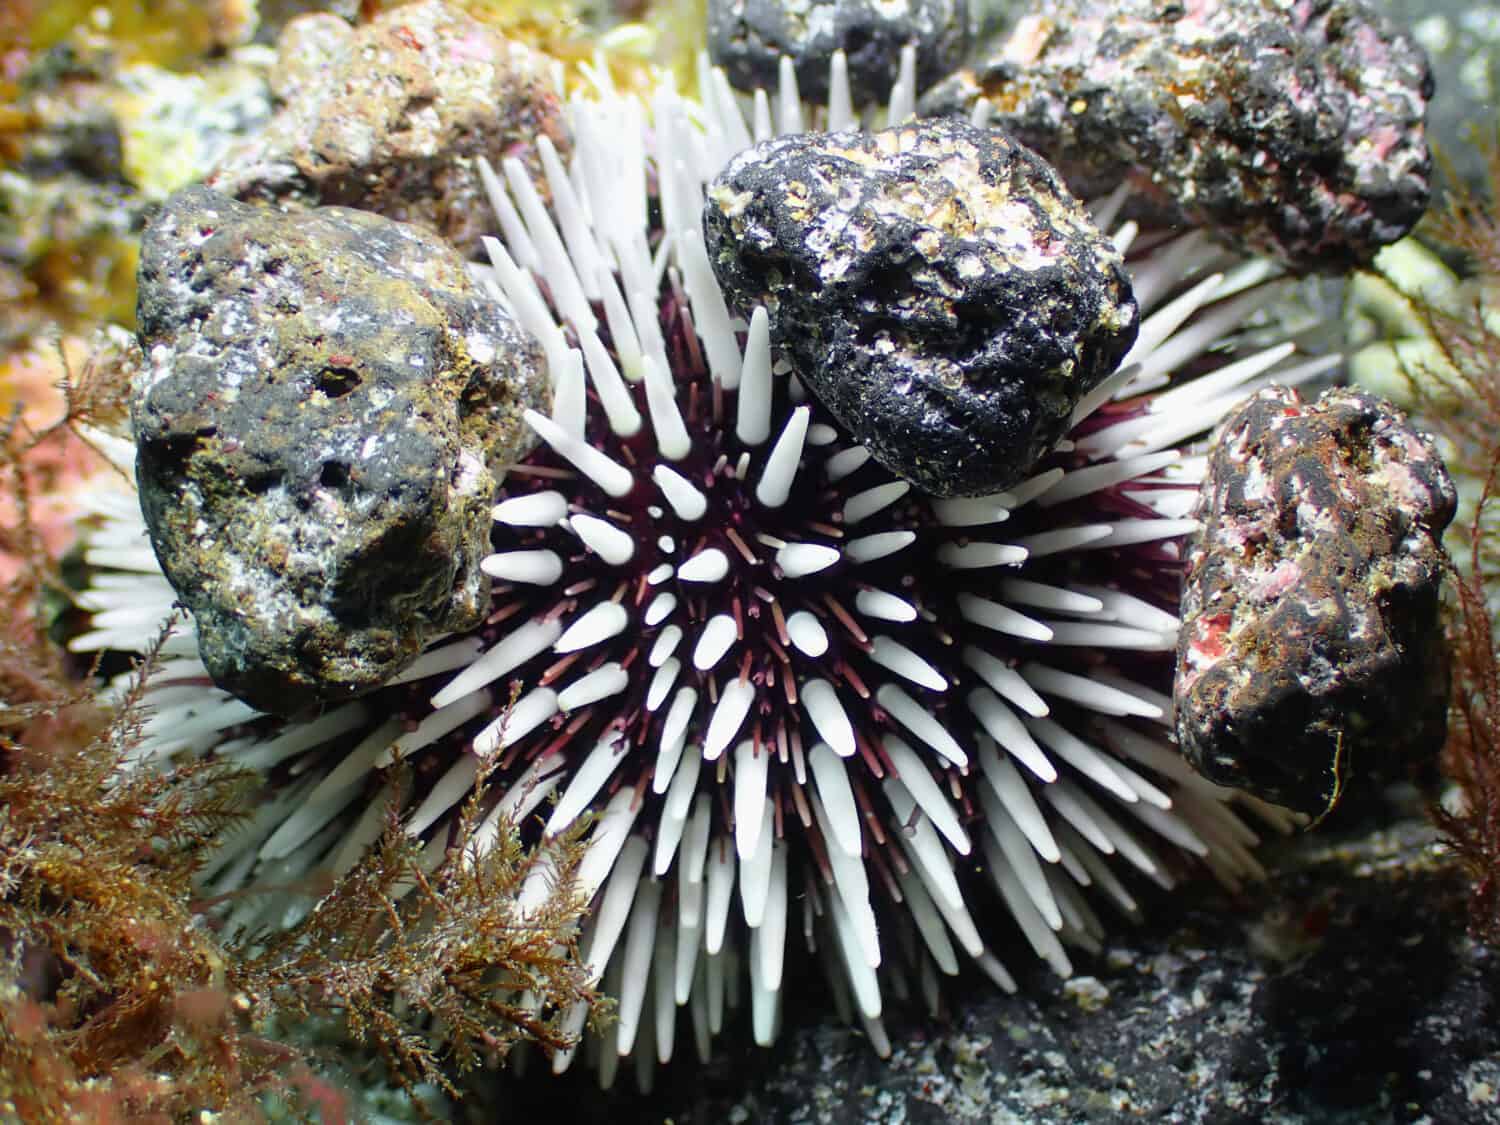 An underwater shot of a Sphaerechinus granularis, a purple sea urchin at the Canary islands